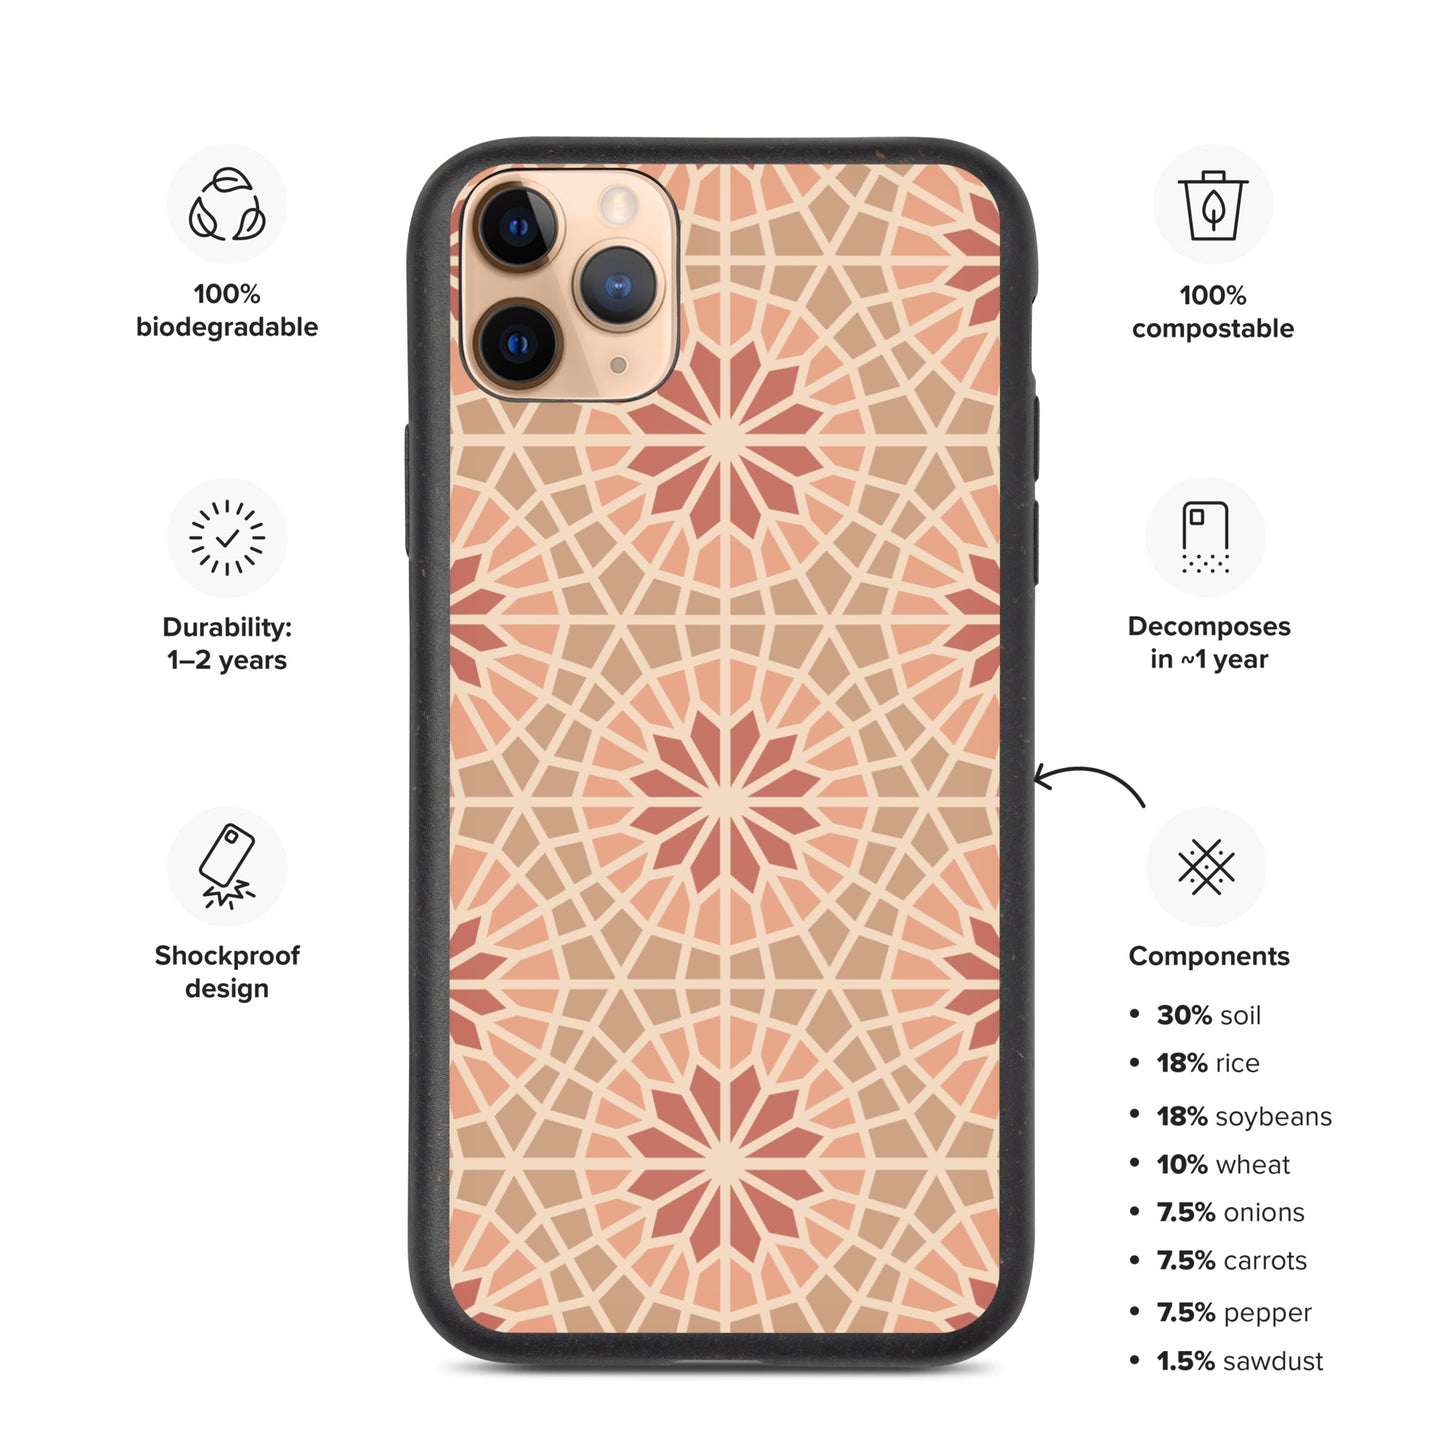 Biodegradable phone case 🍃 - Geometric Star 2 - Cocoa and Cream